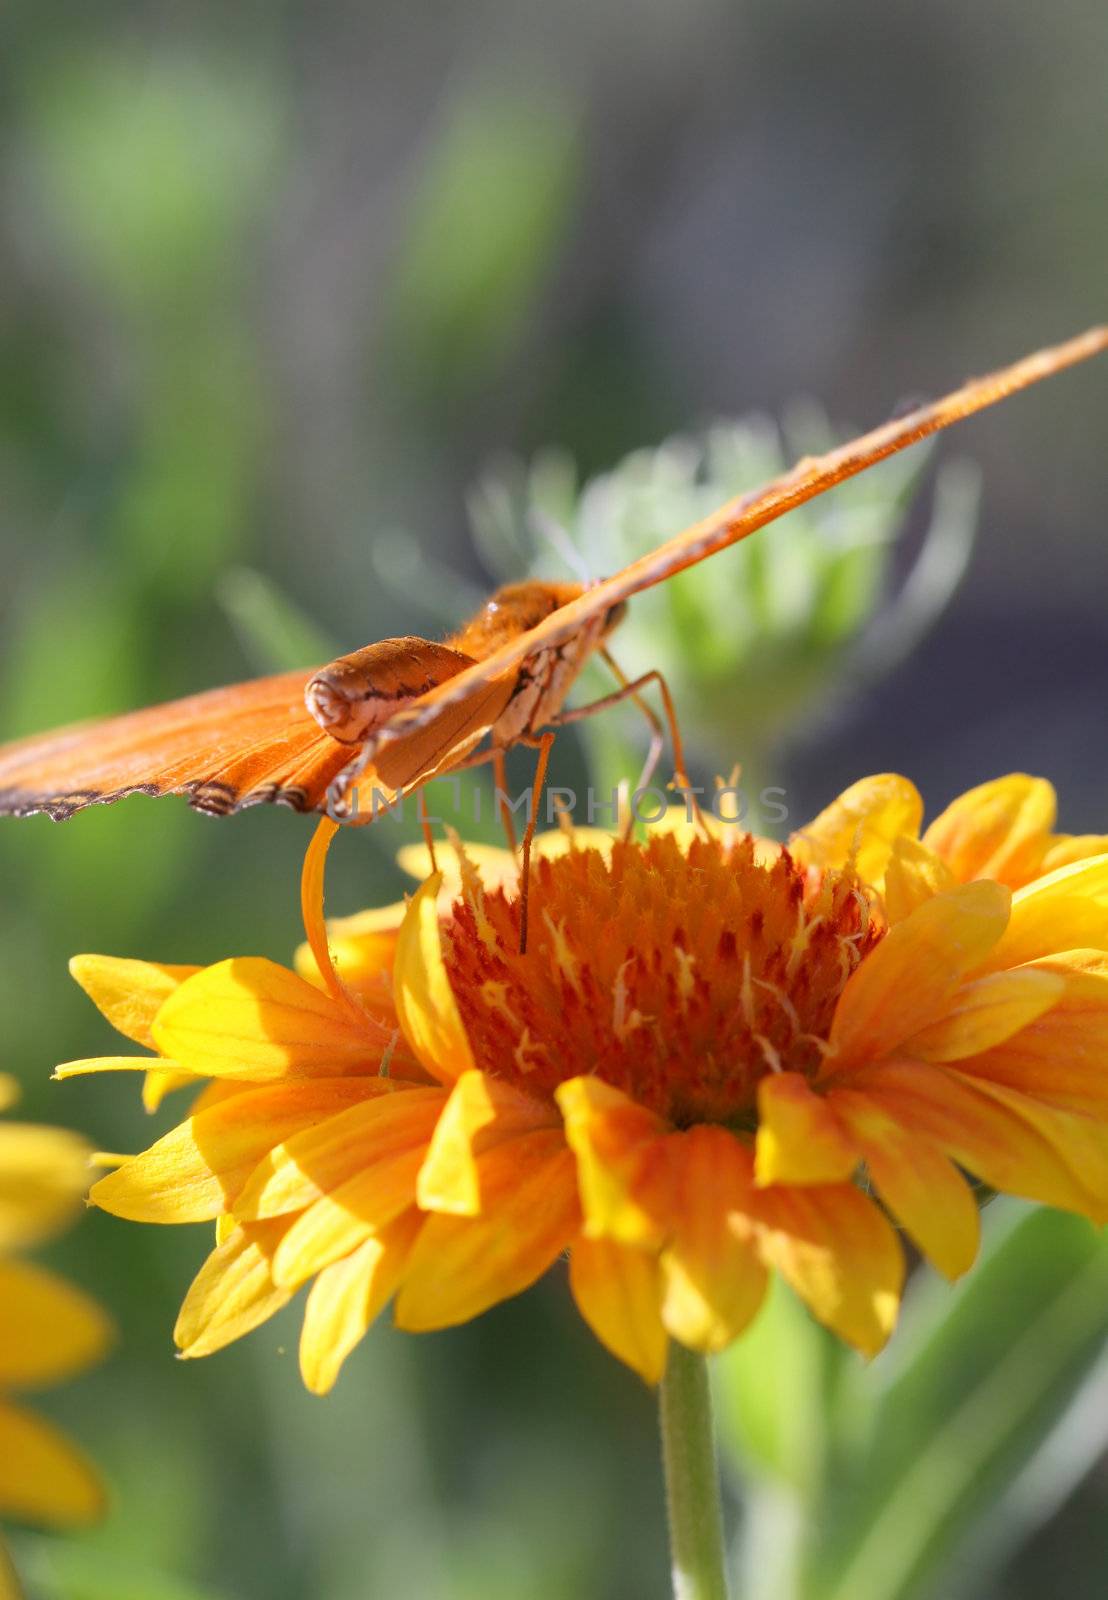 A Julia Longwing Butterfly on a flower. Aft shot